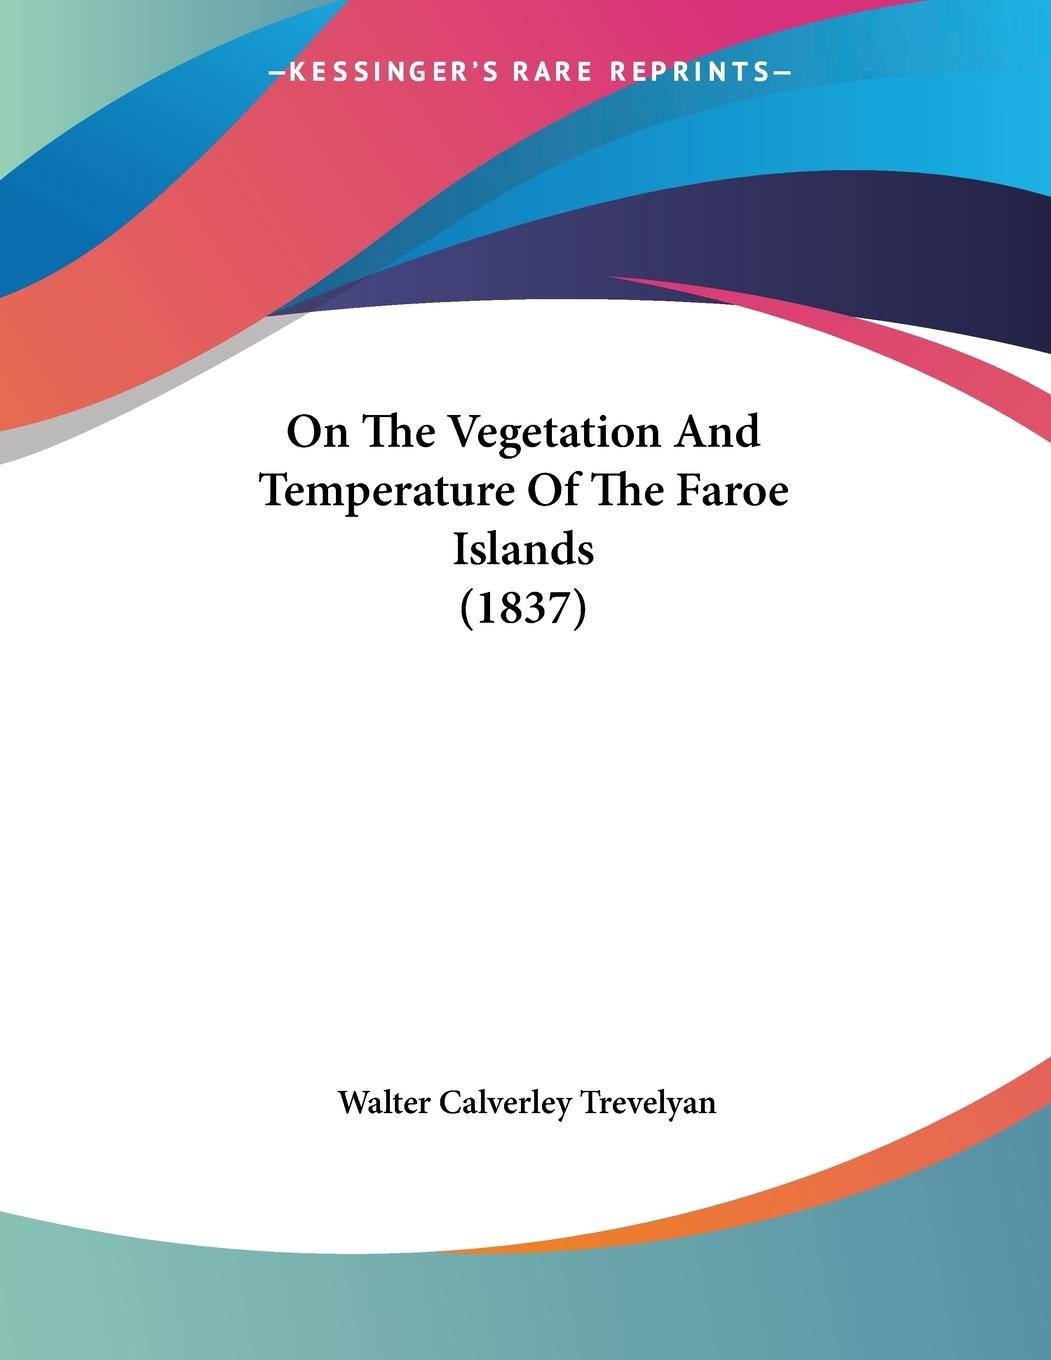 On The Vegetation And Temperature Of The Faroe Islands (1837) - Trevelyan, Walter Calverley